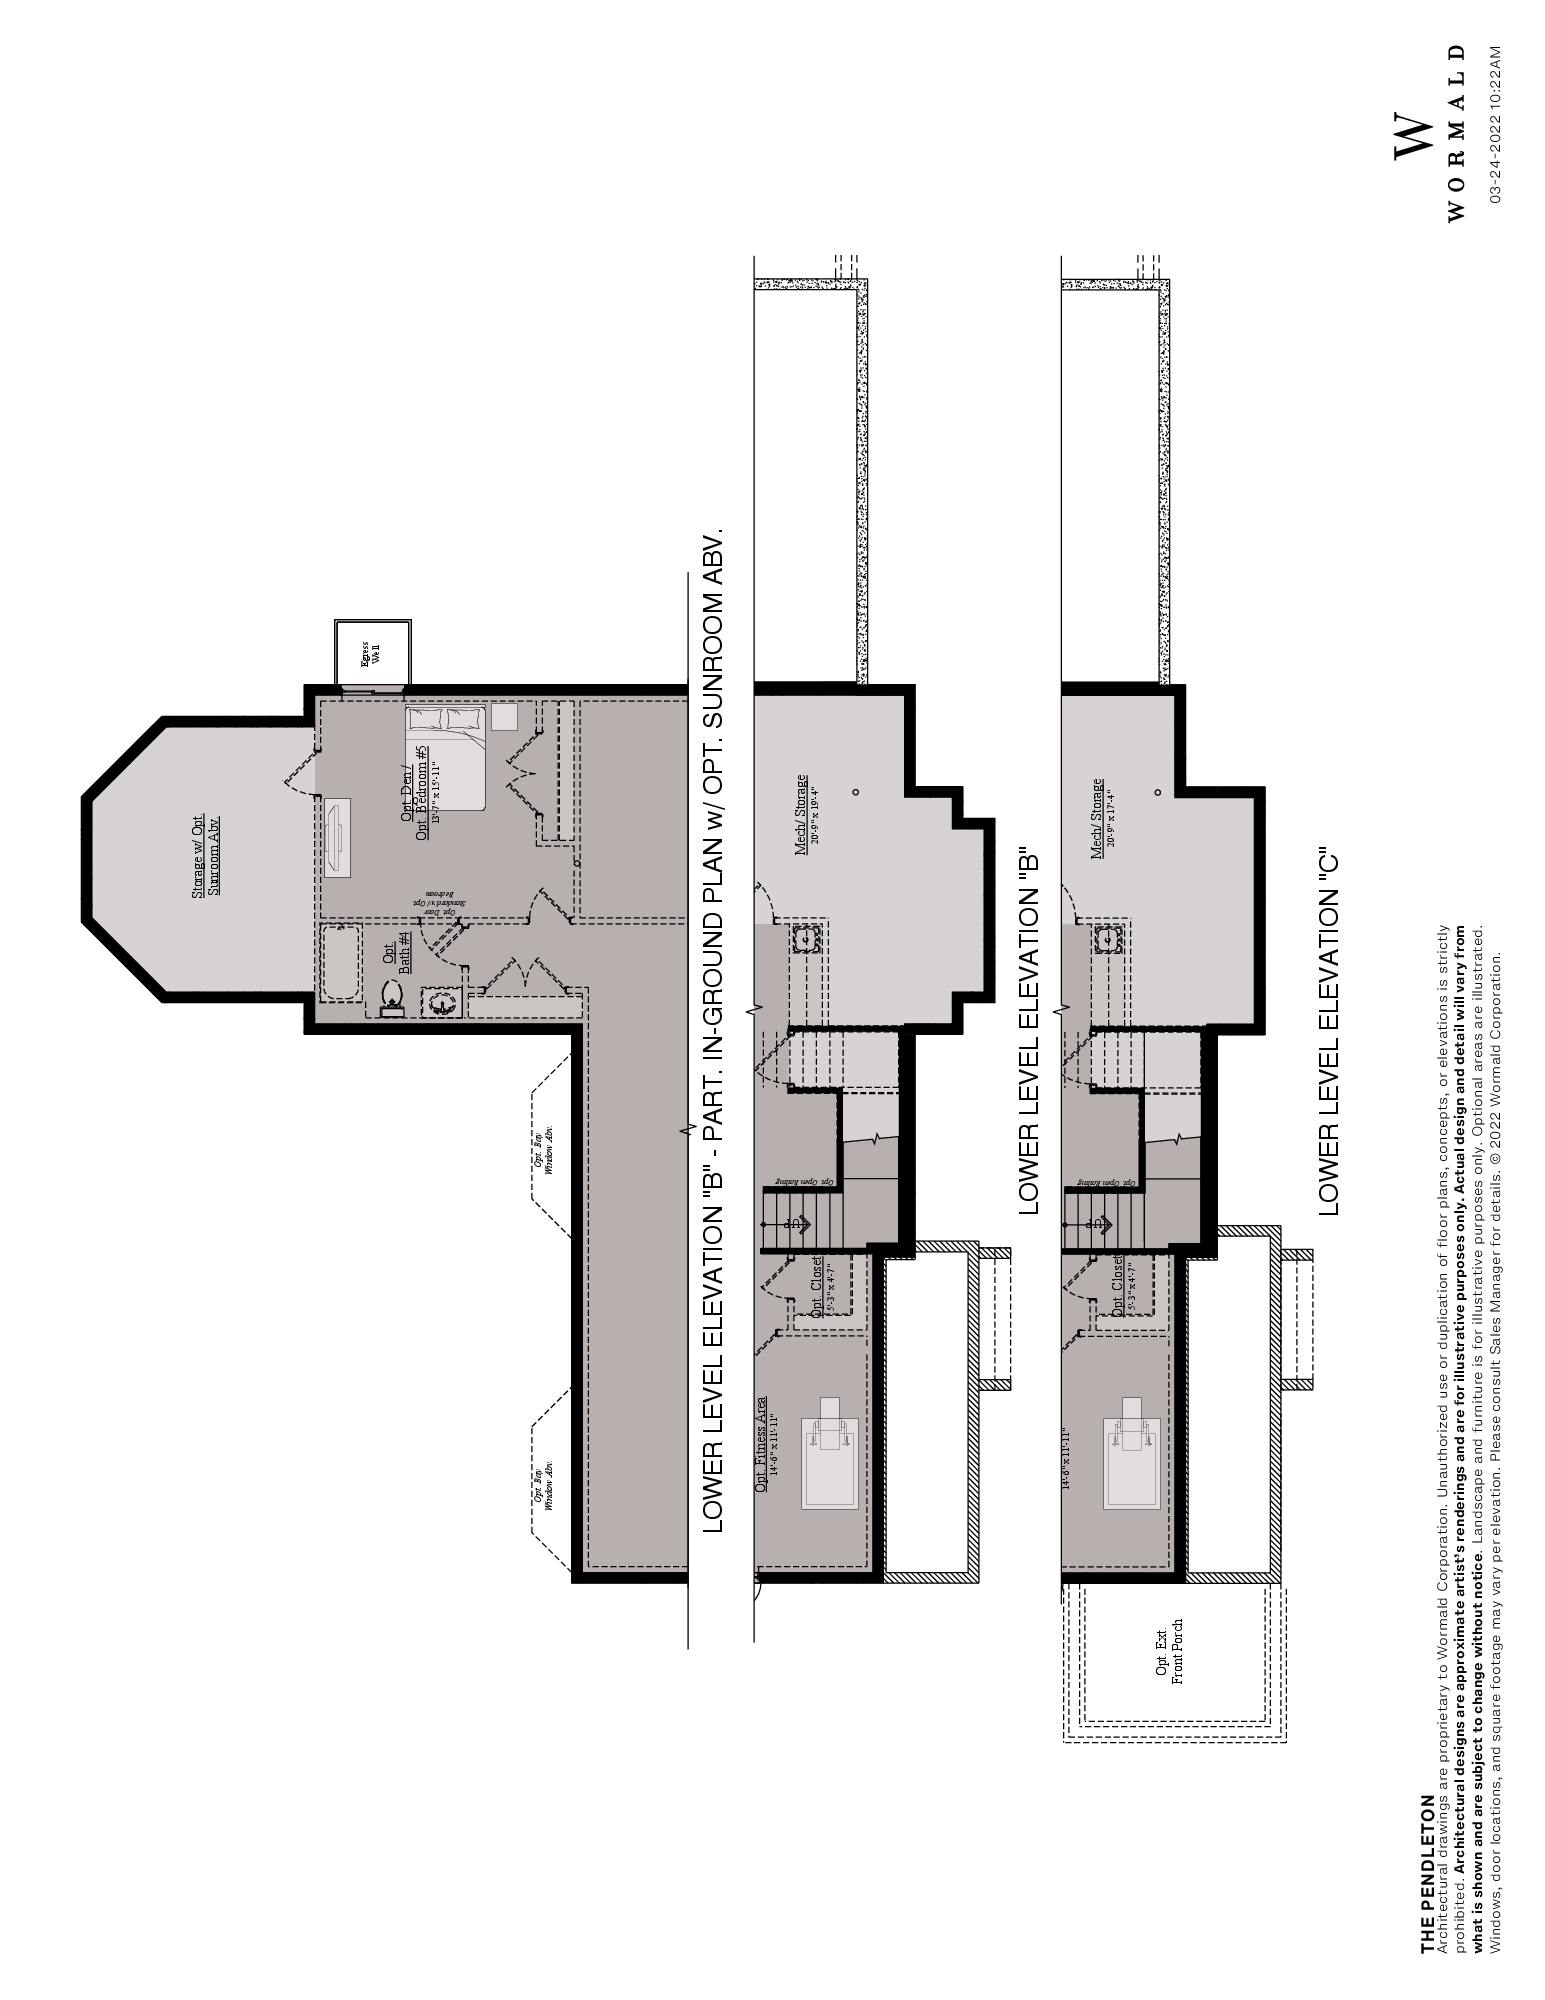 The Pendleton floor plan 6